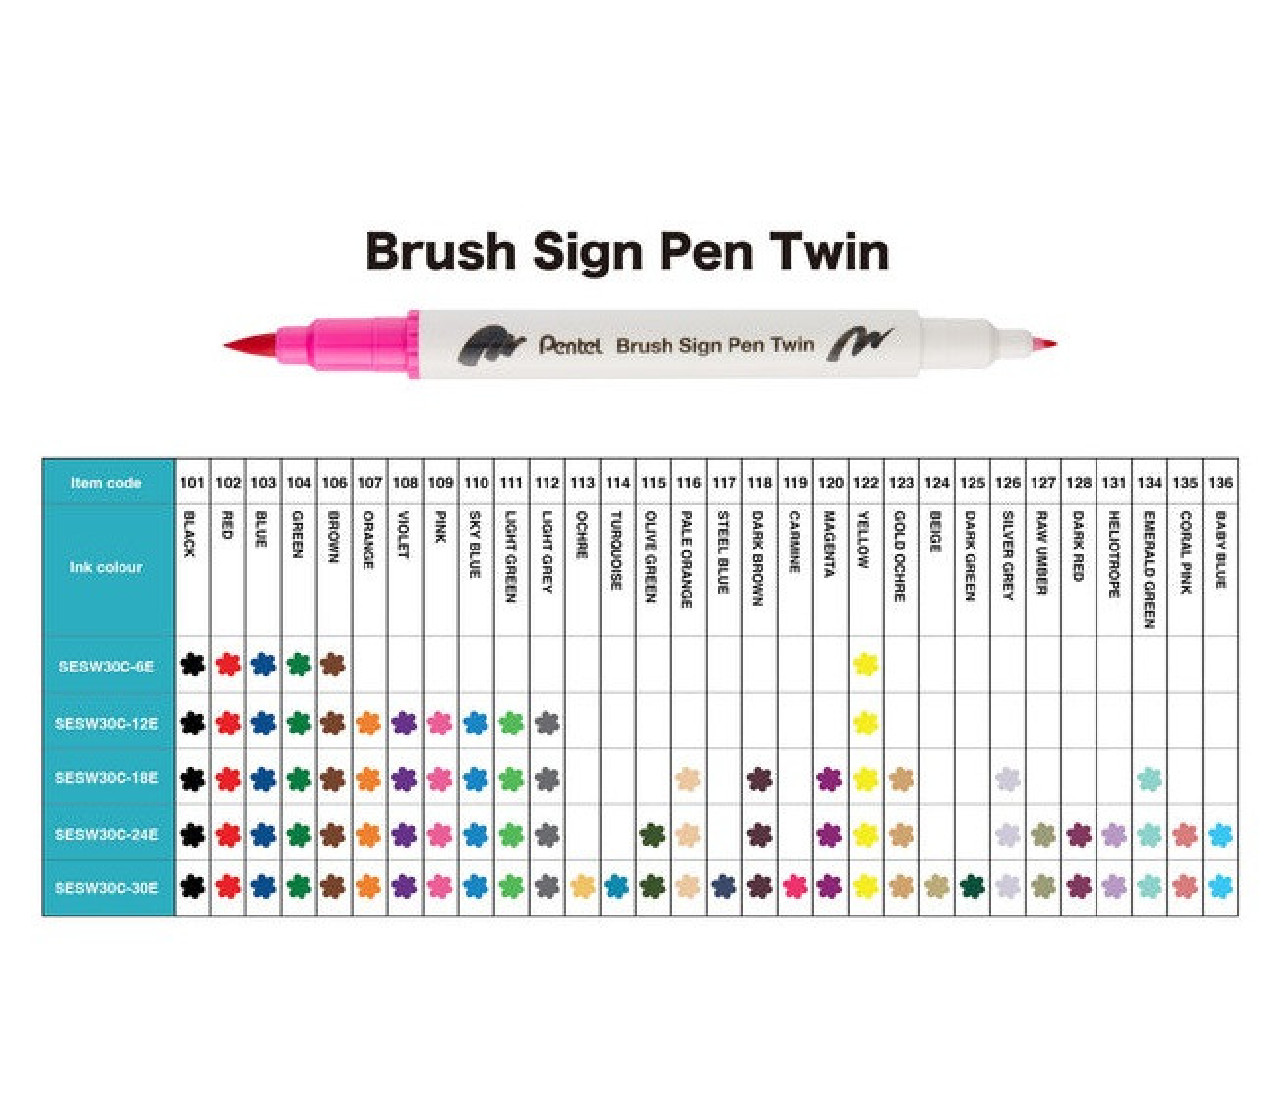 Pentel Brush Sign Pen Twin T122 Yellow